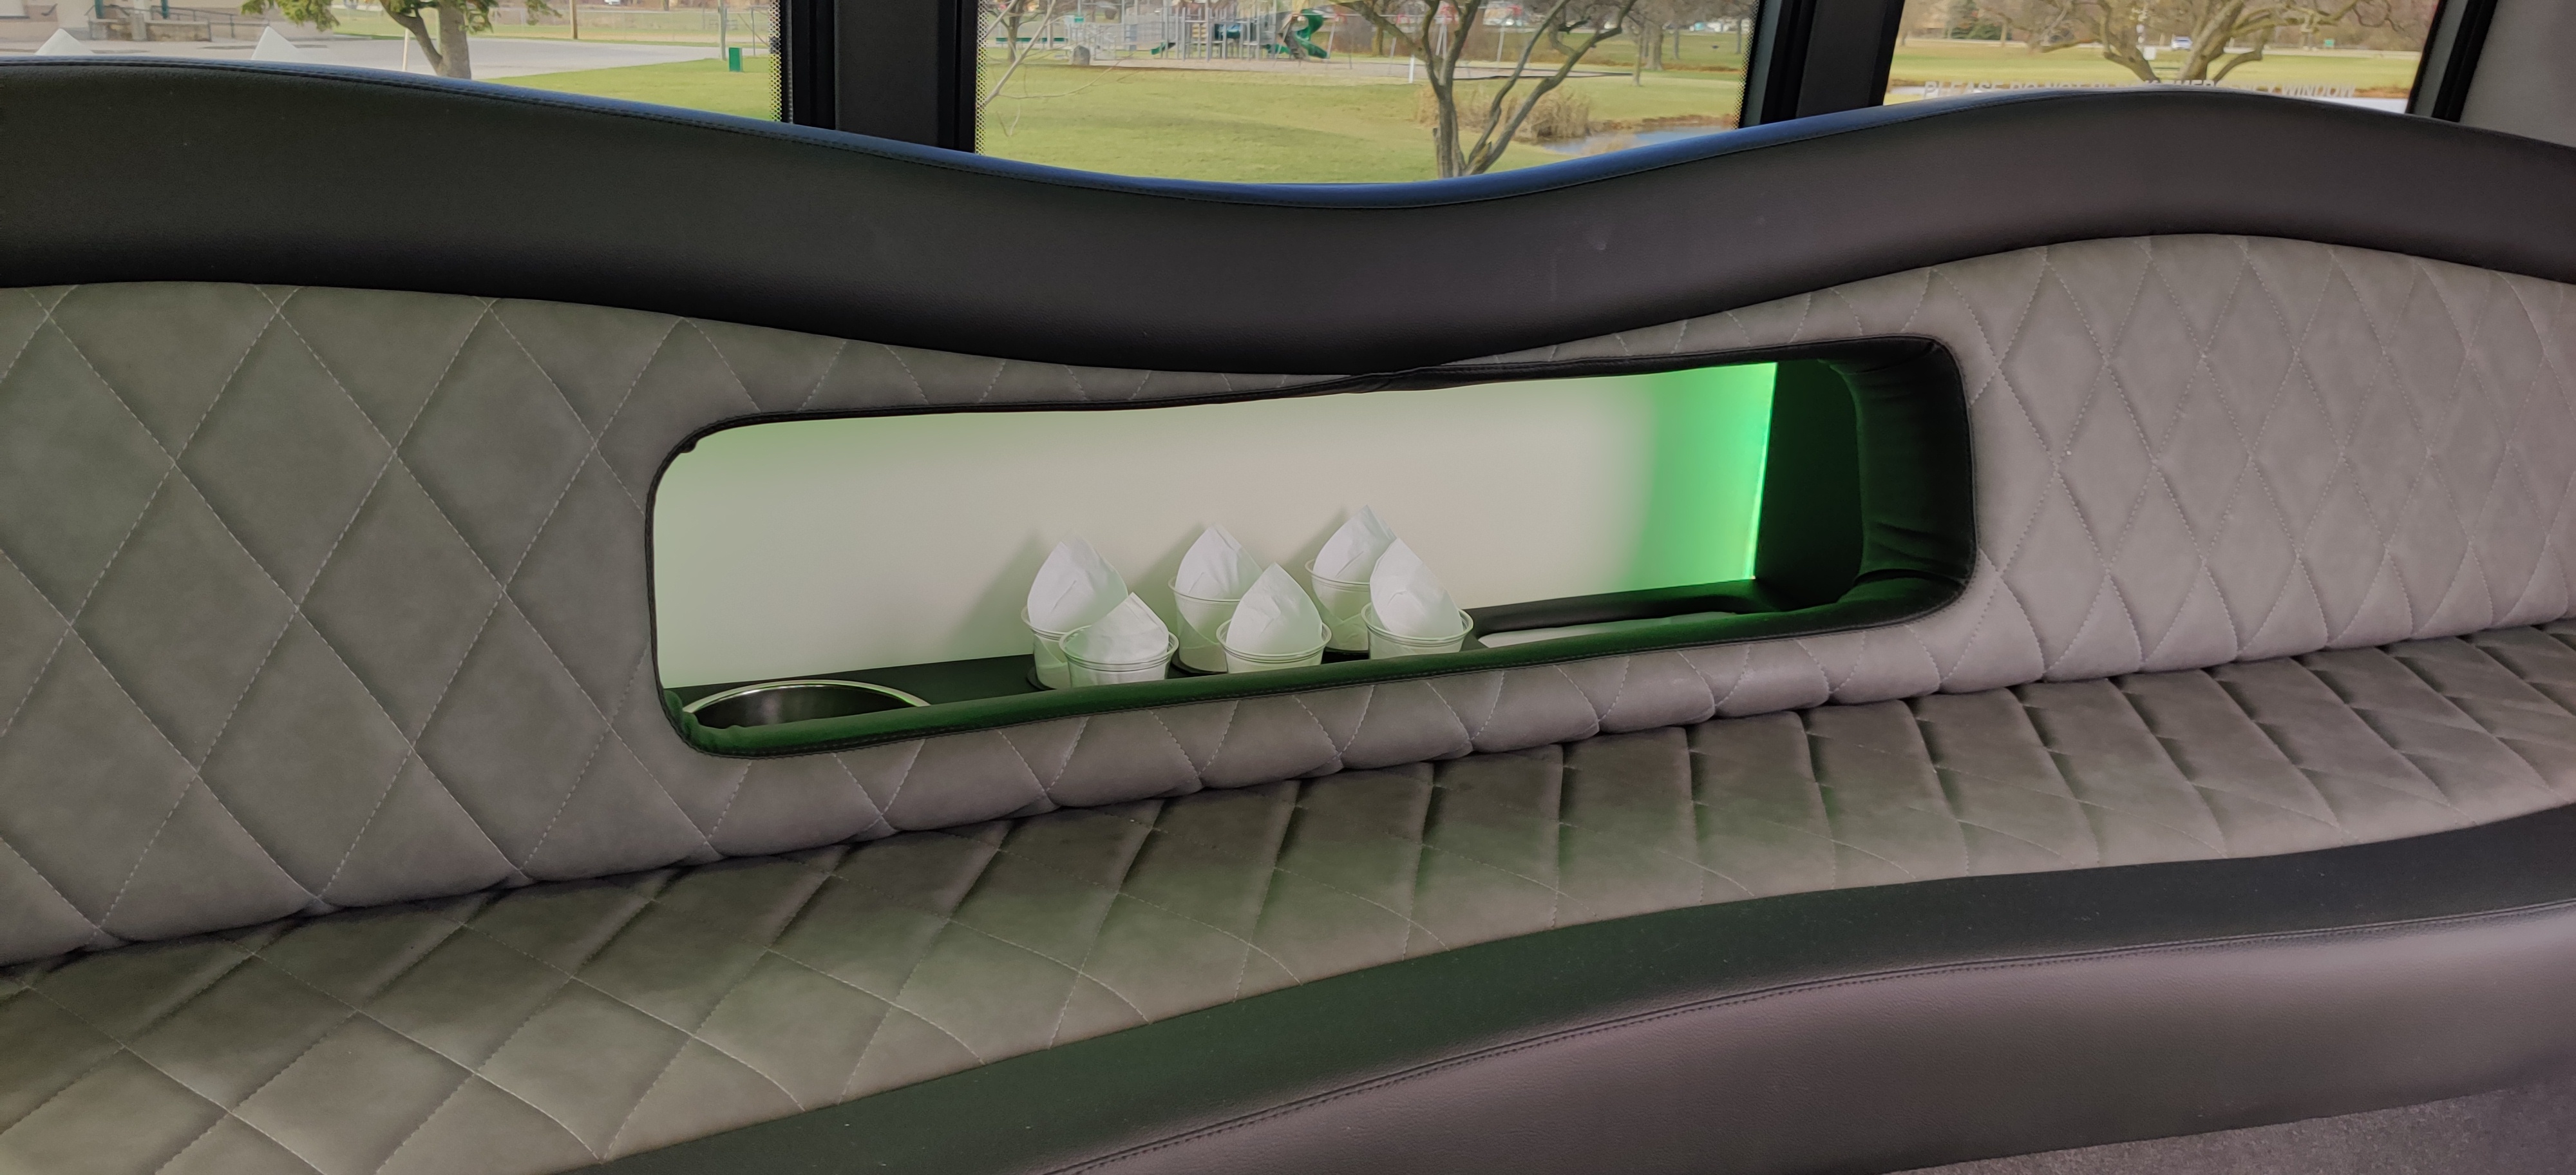 28-2 Passenger Luxury Limo Bus Ice Well 2